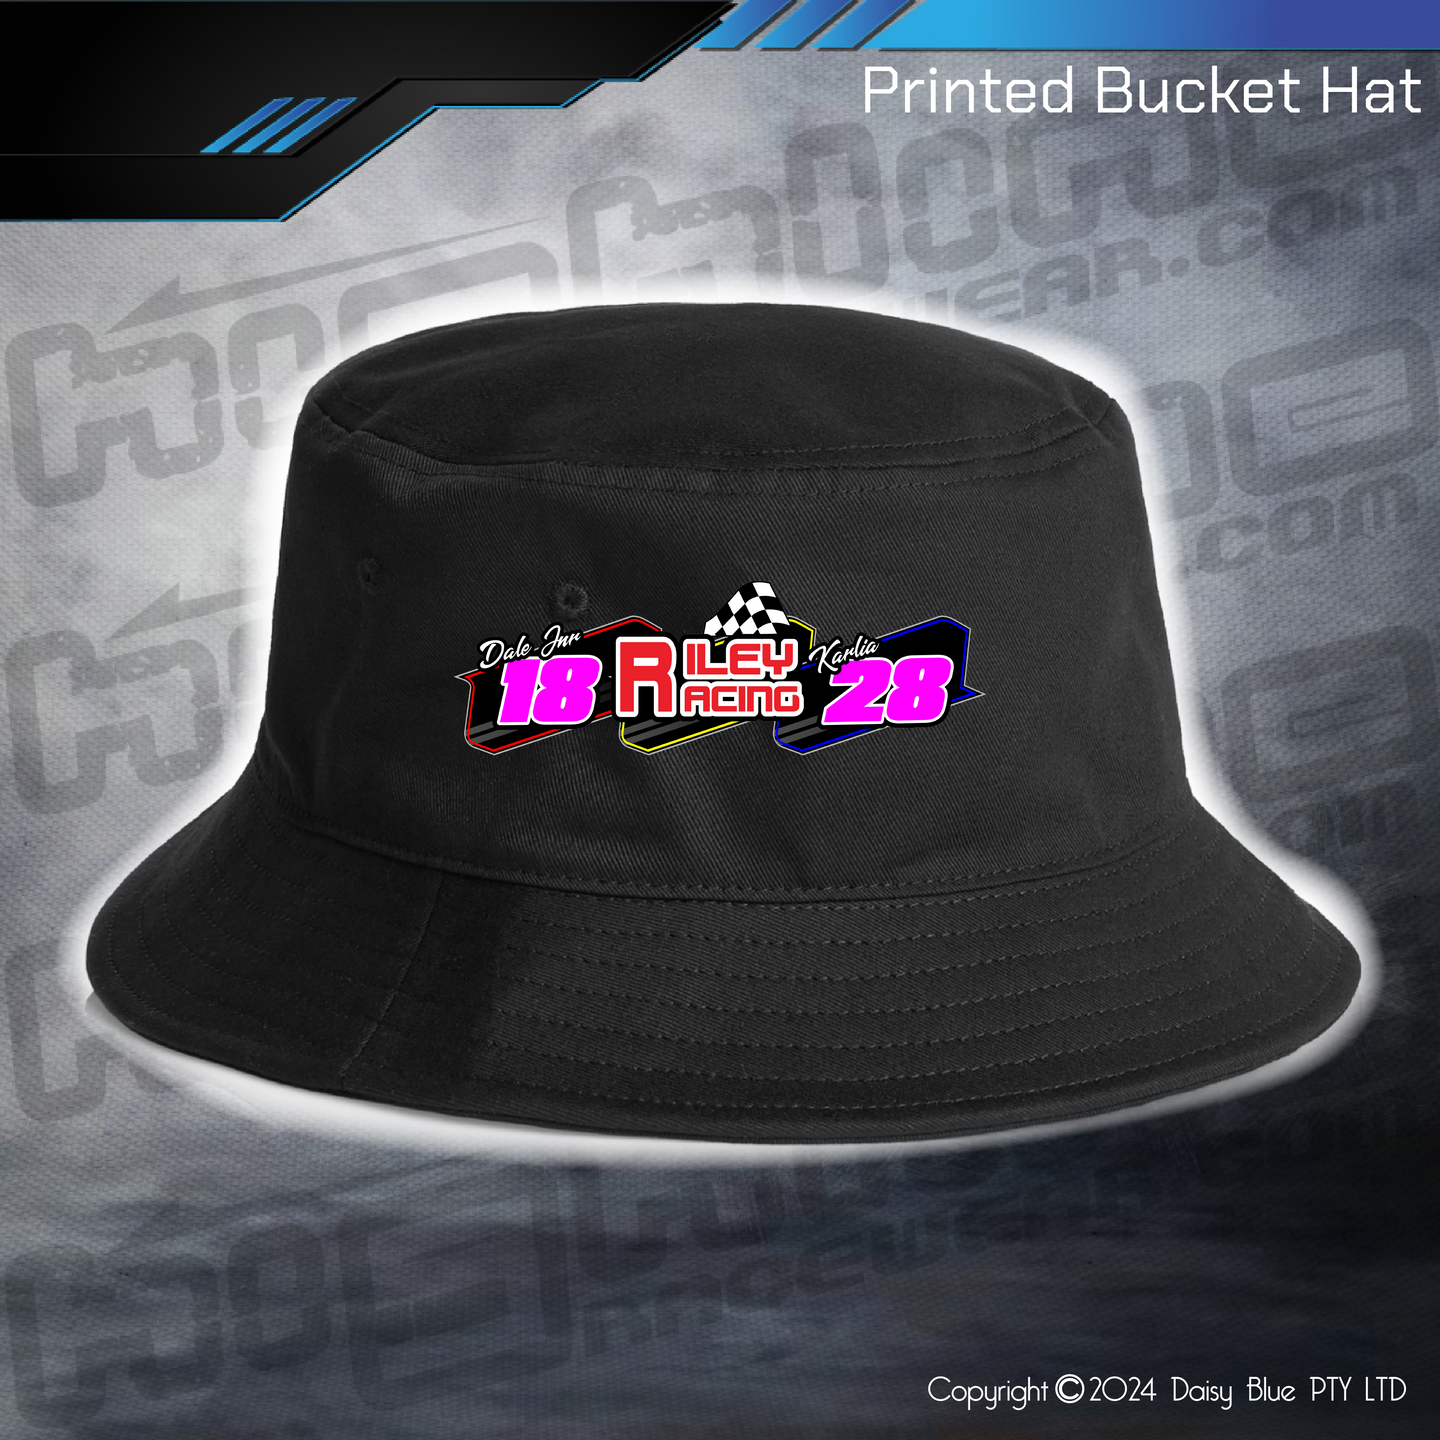 Printed Bucket Hat - Riley Racing